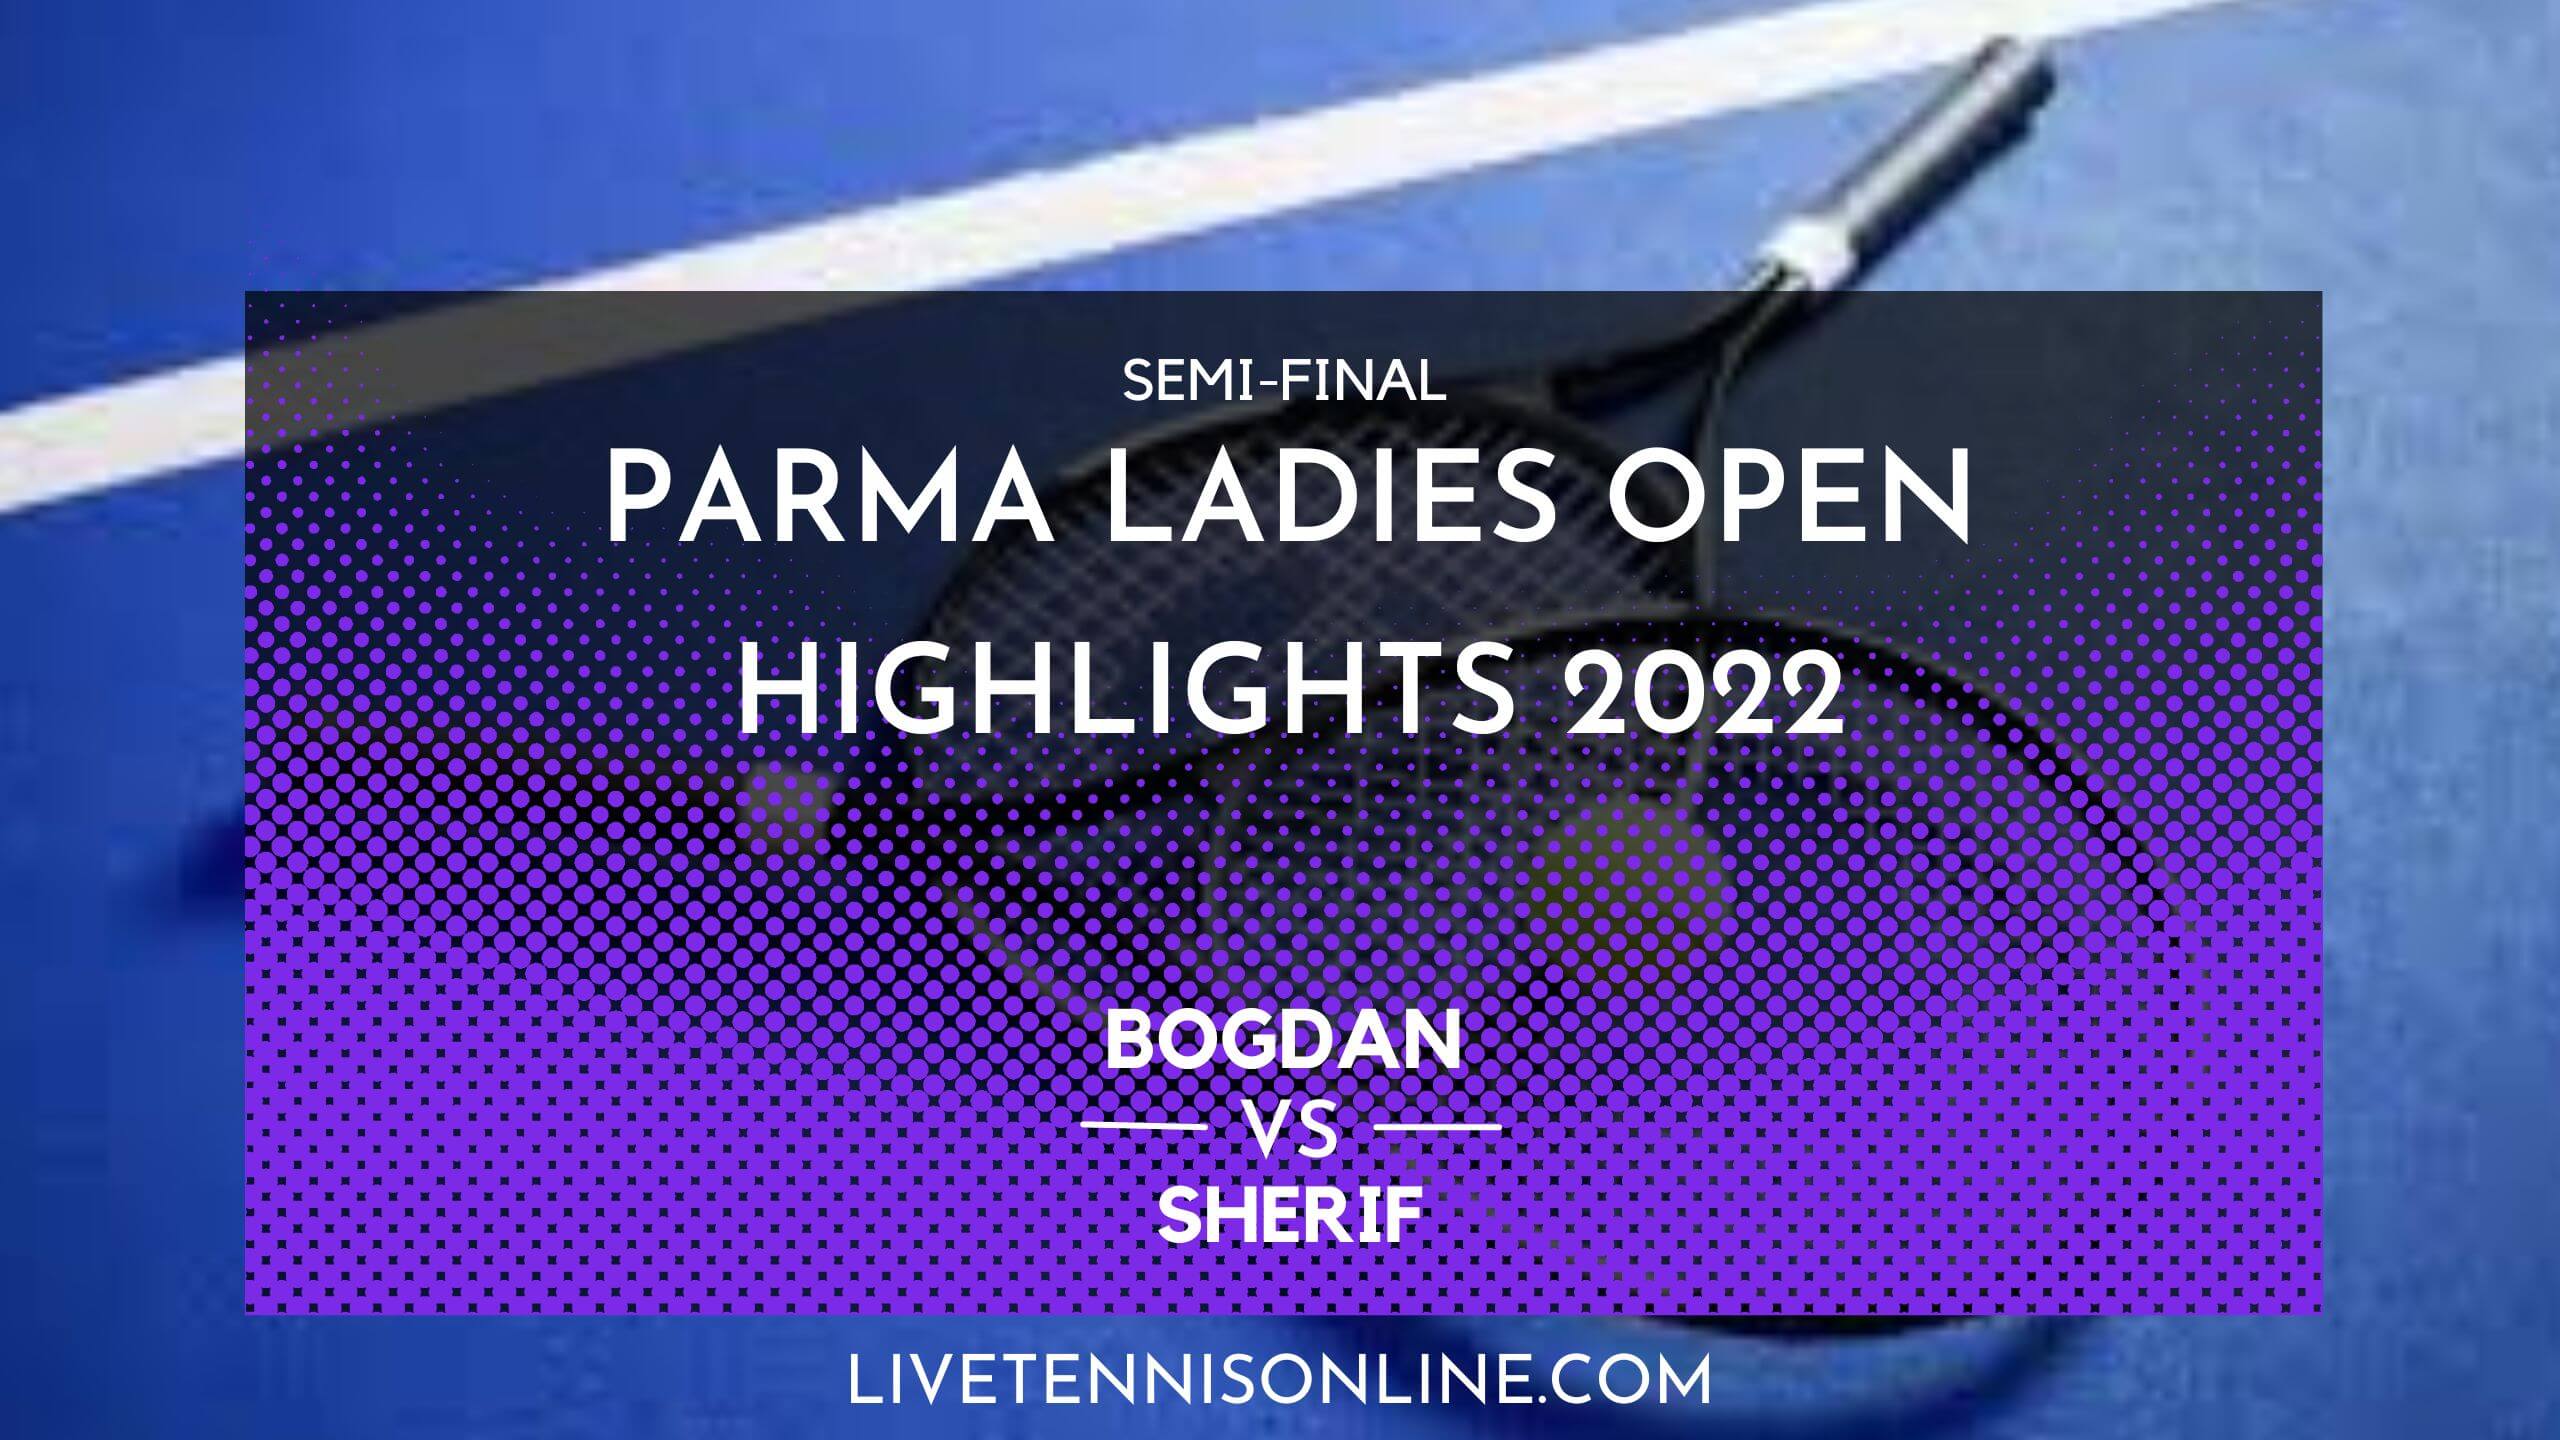 Bogdan Vs Sherif SF Highlights 2022 Parma Ladies Open